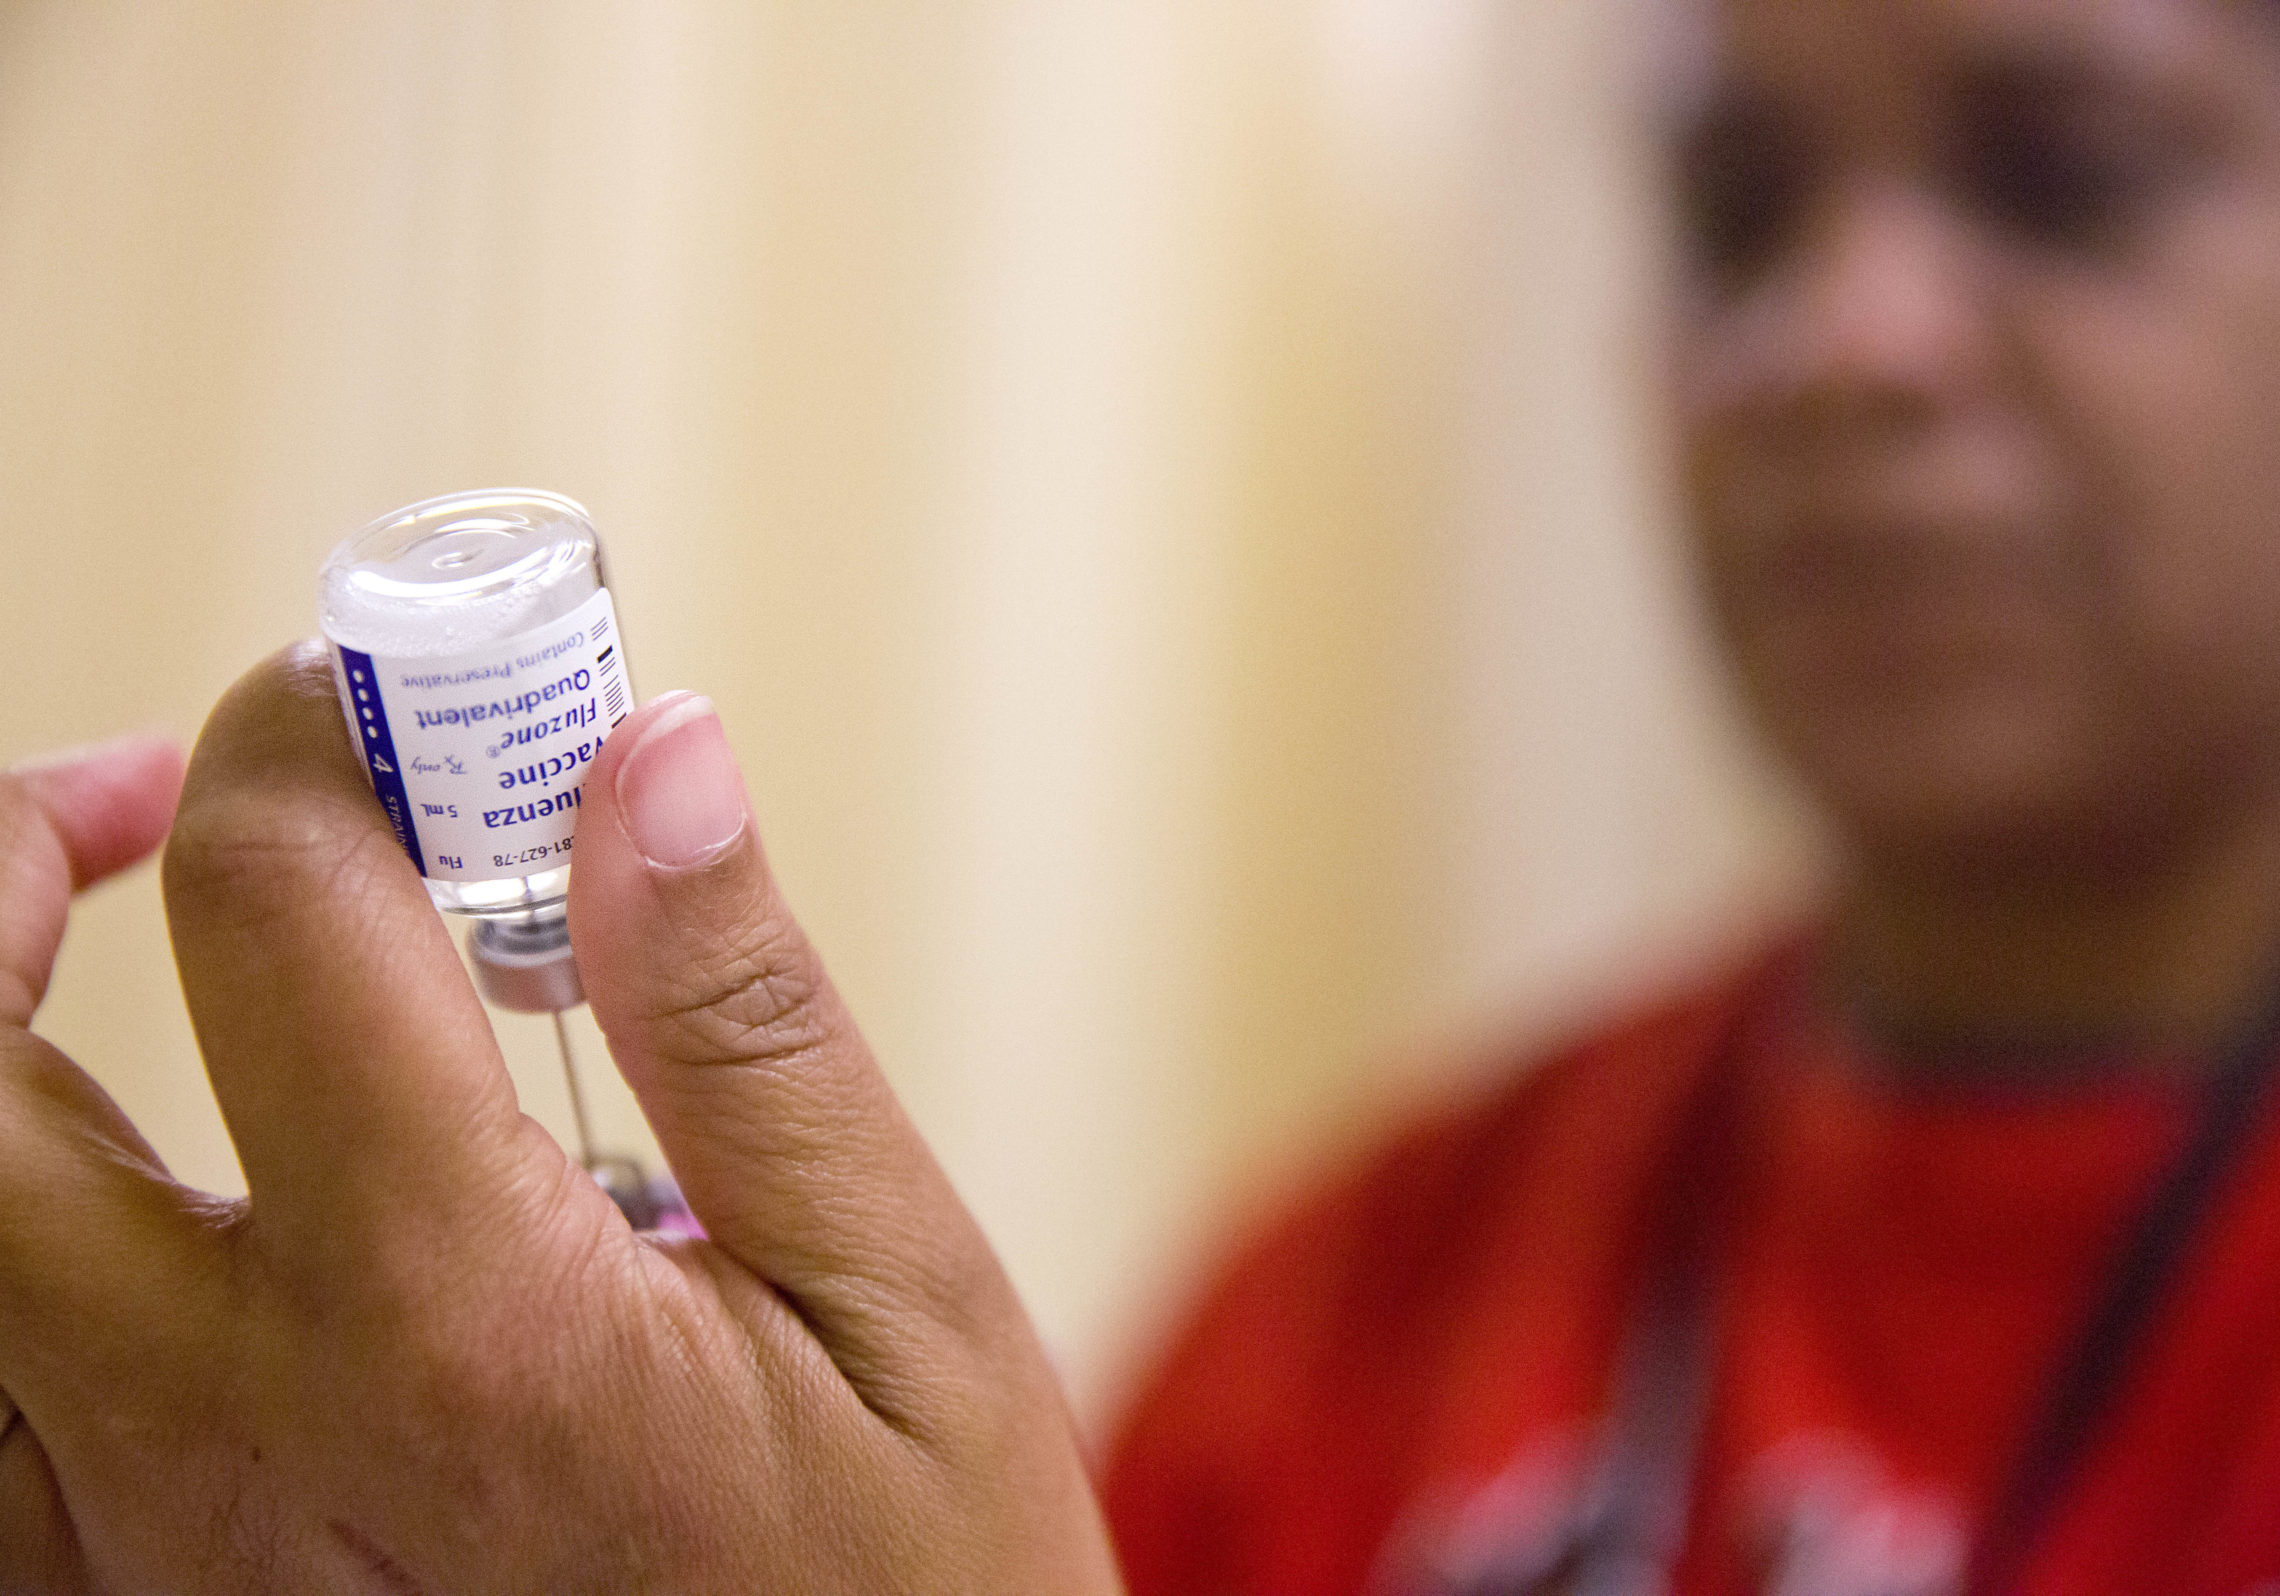 A nurse prepares a flu shot from a vaccine vial. CREDIT: DAVID GOLDMAN